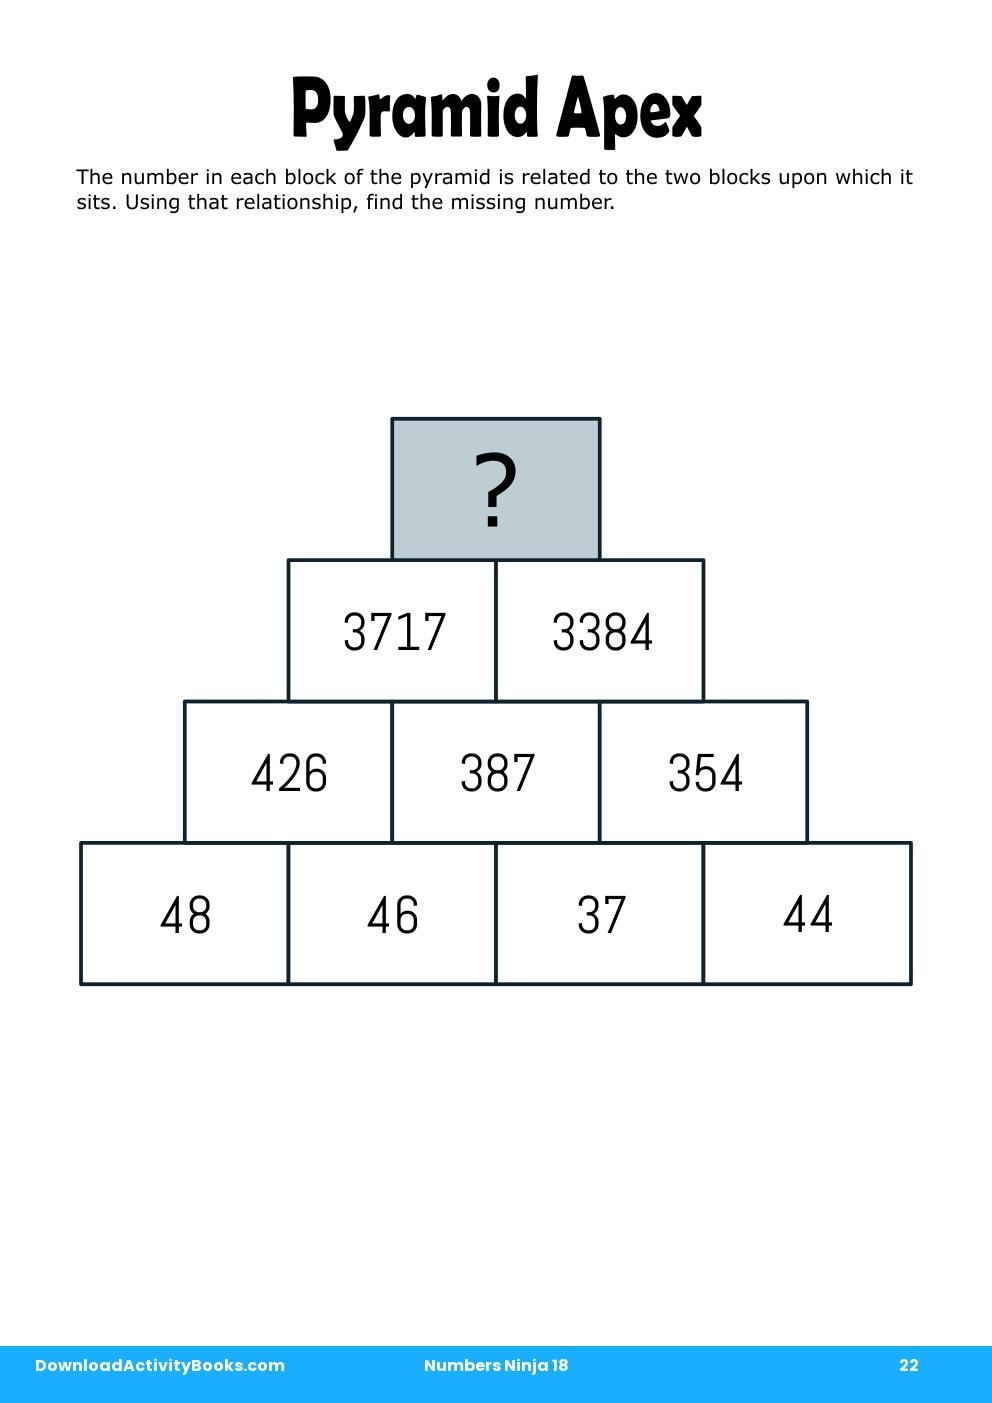 Pyramid Apex in Numbers Ninja 18